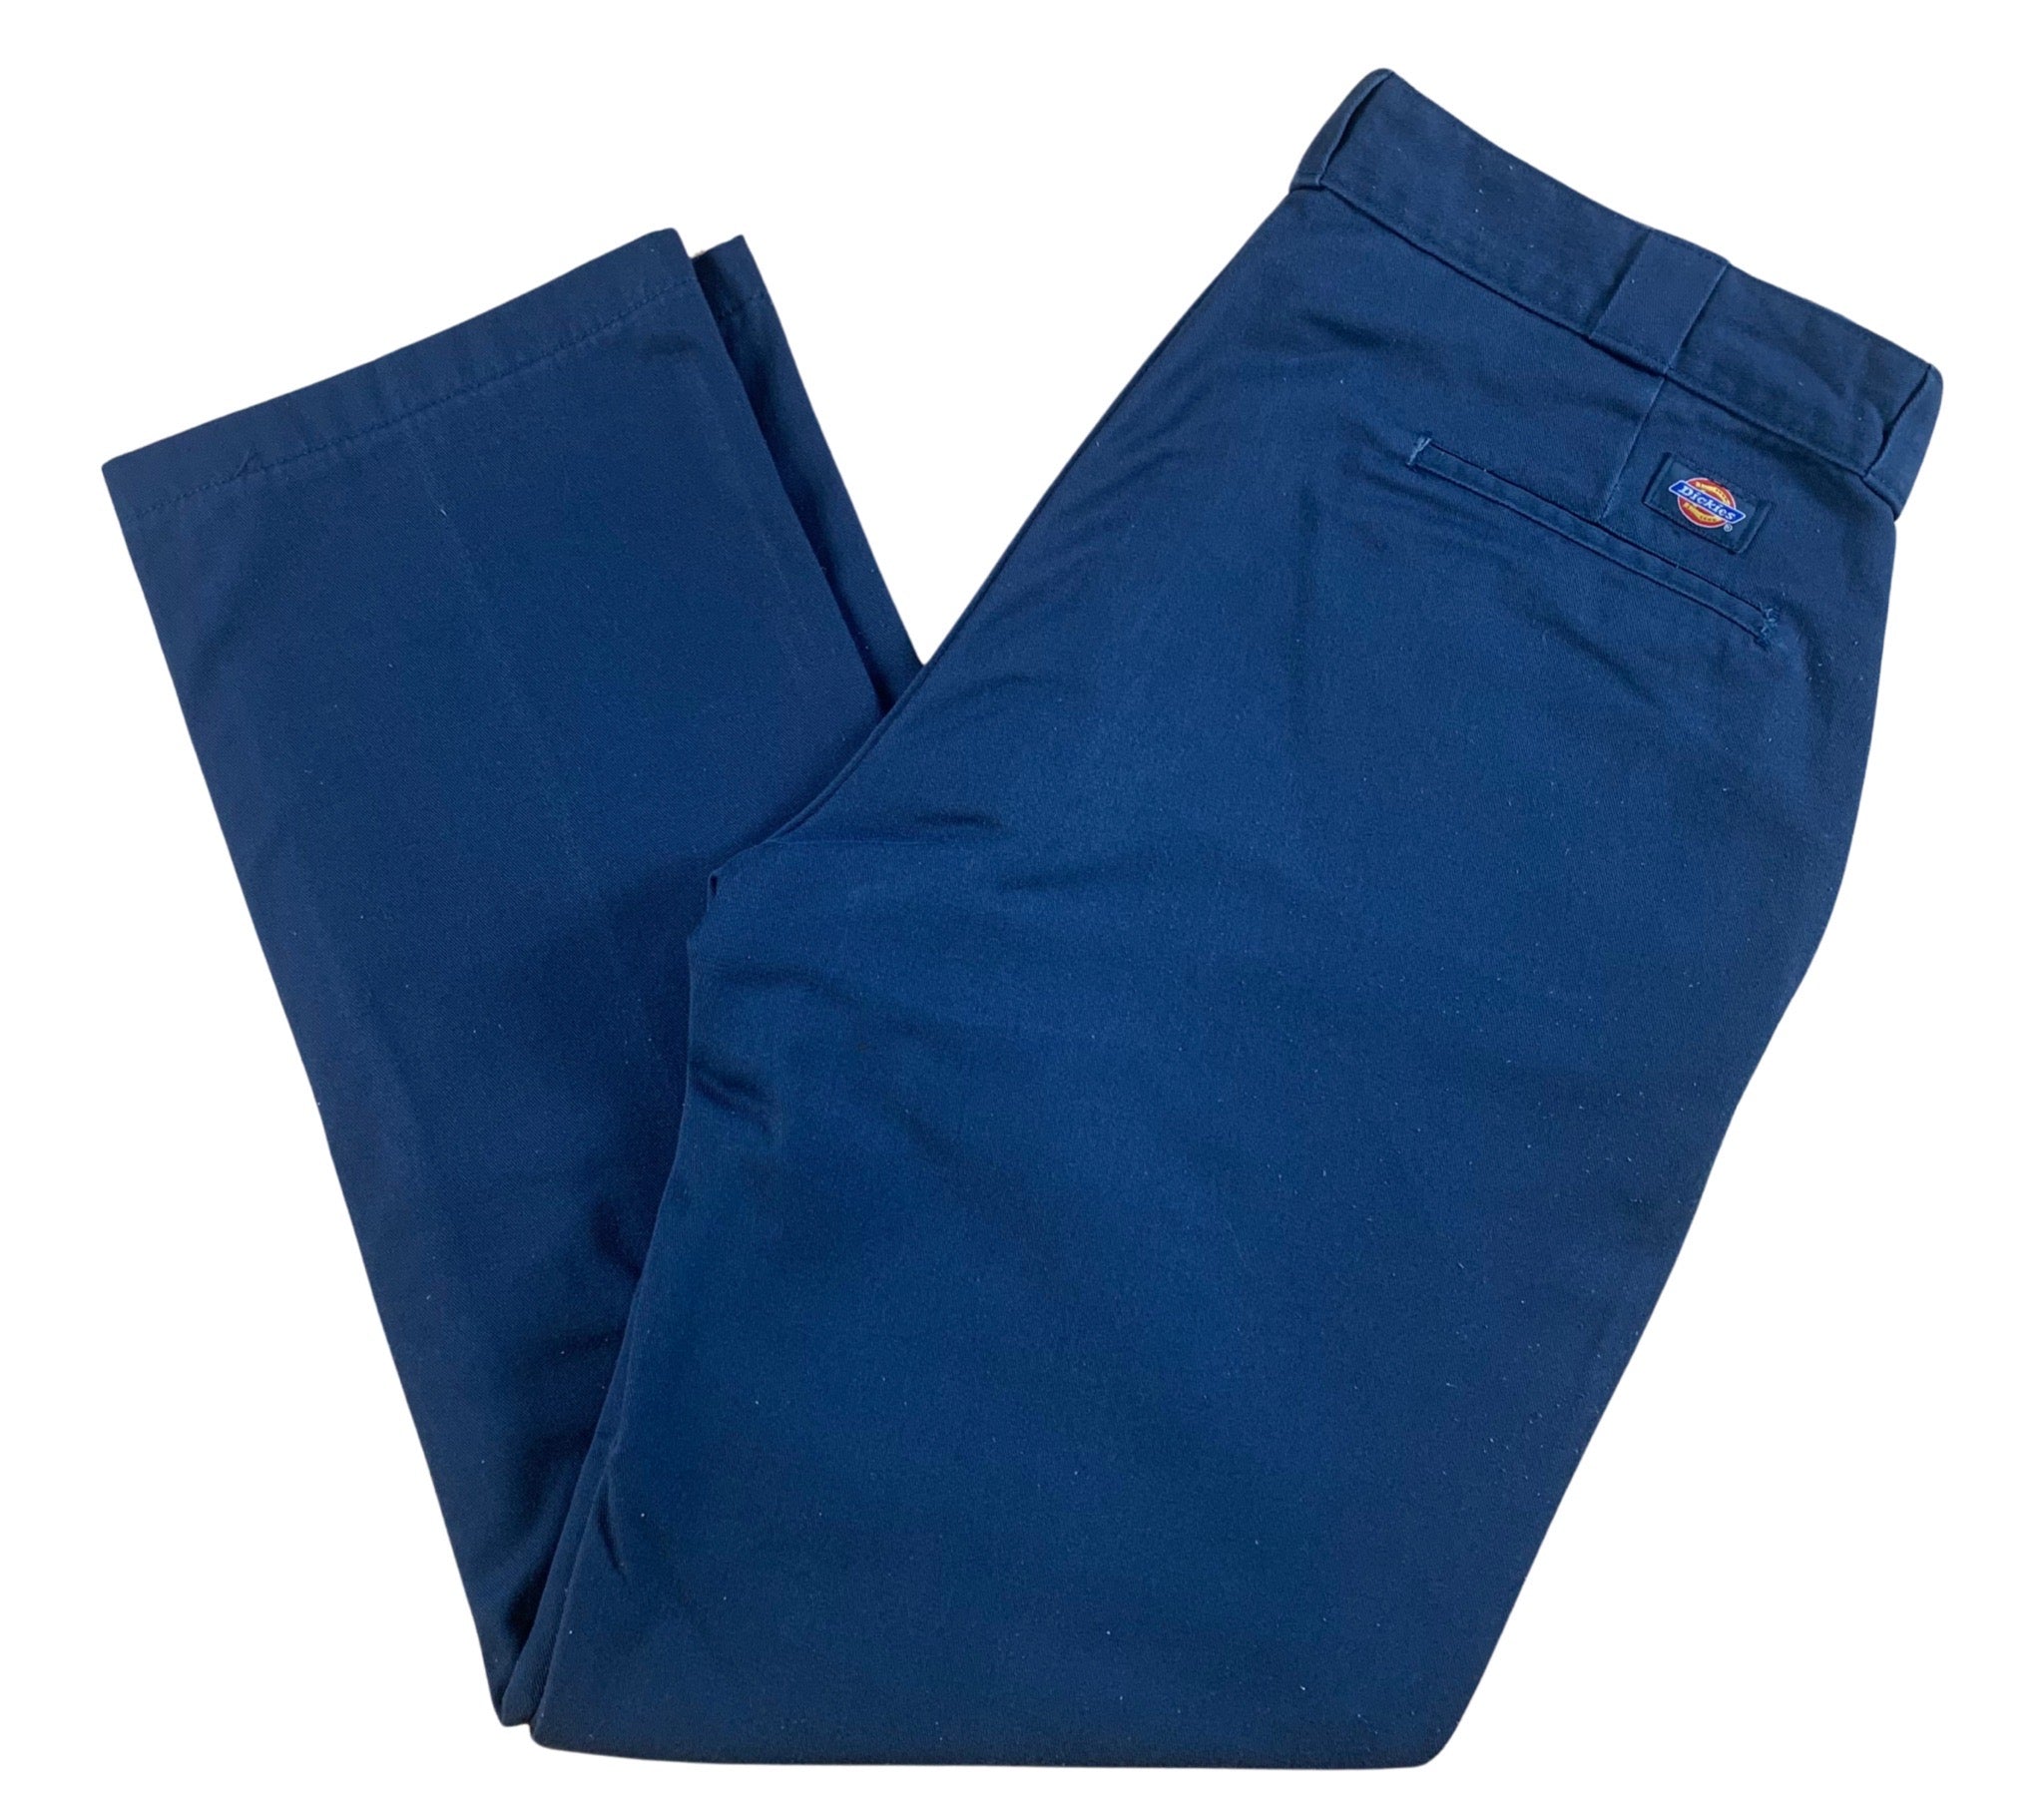 1x Vintage DICKIES Navy Blue Straight Leg Trousers - Waist 42 - Length 30 - Vintage Superstore Online